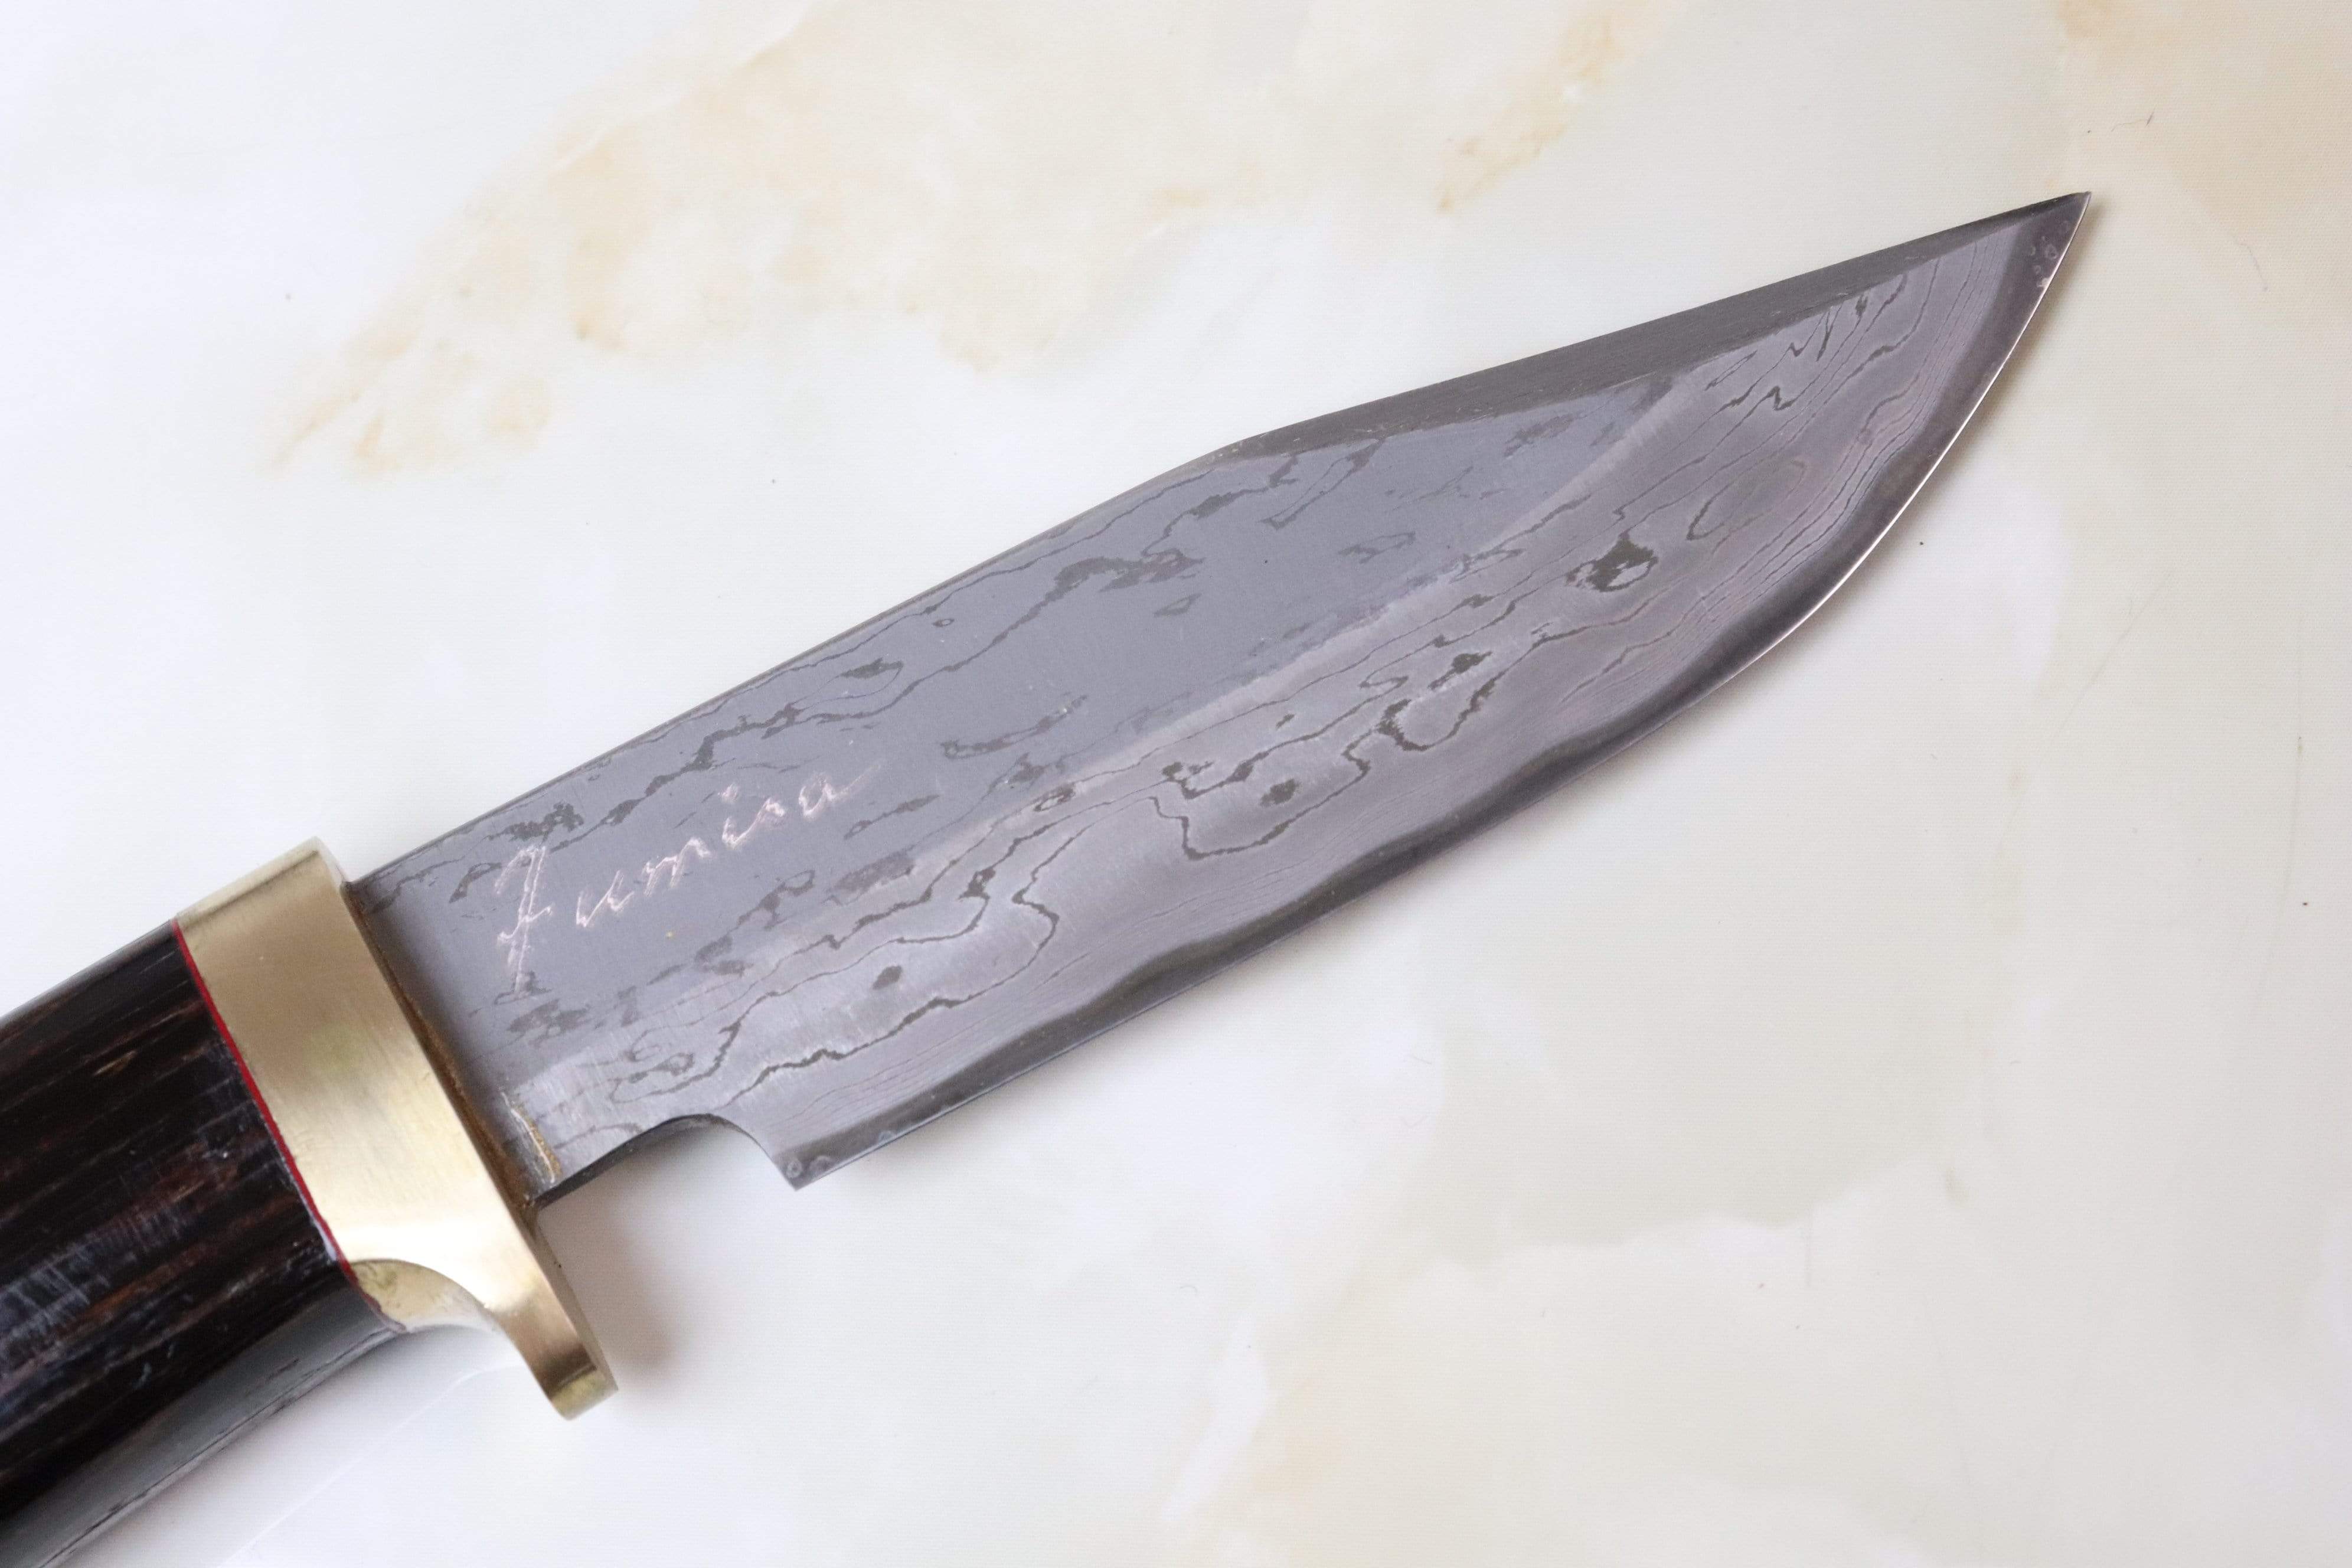 10 Custom Hunting Bowie Knife, Carbon Steel